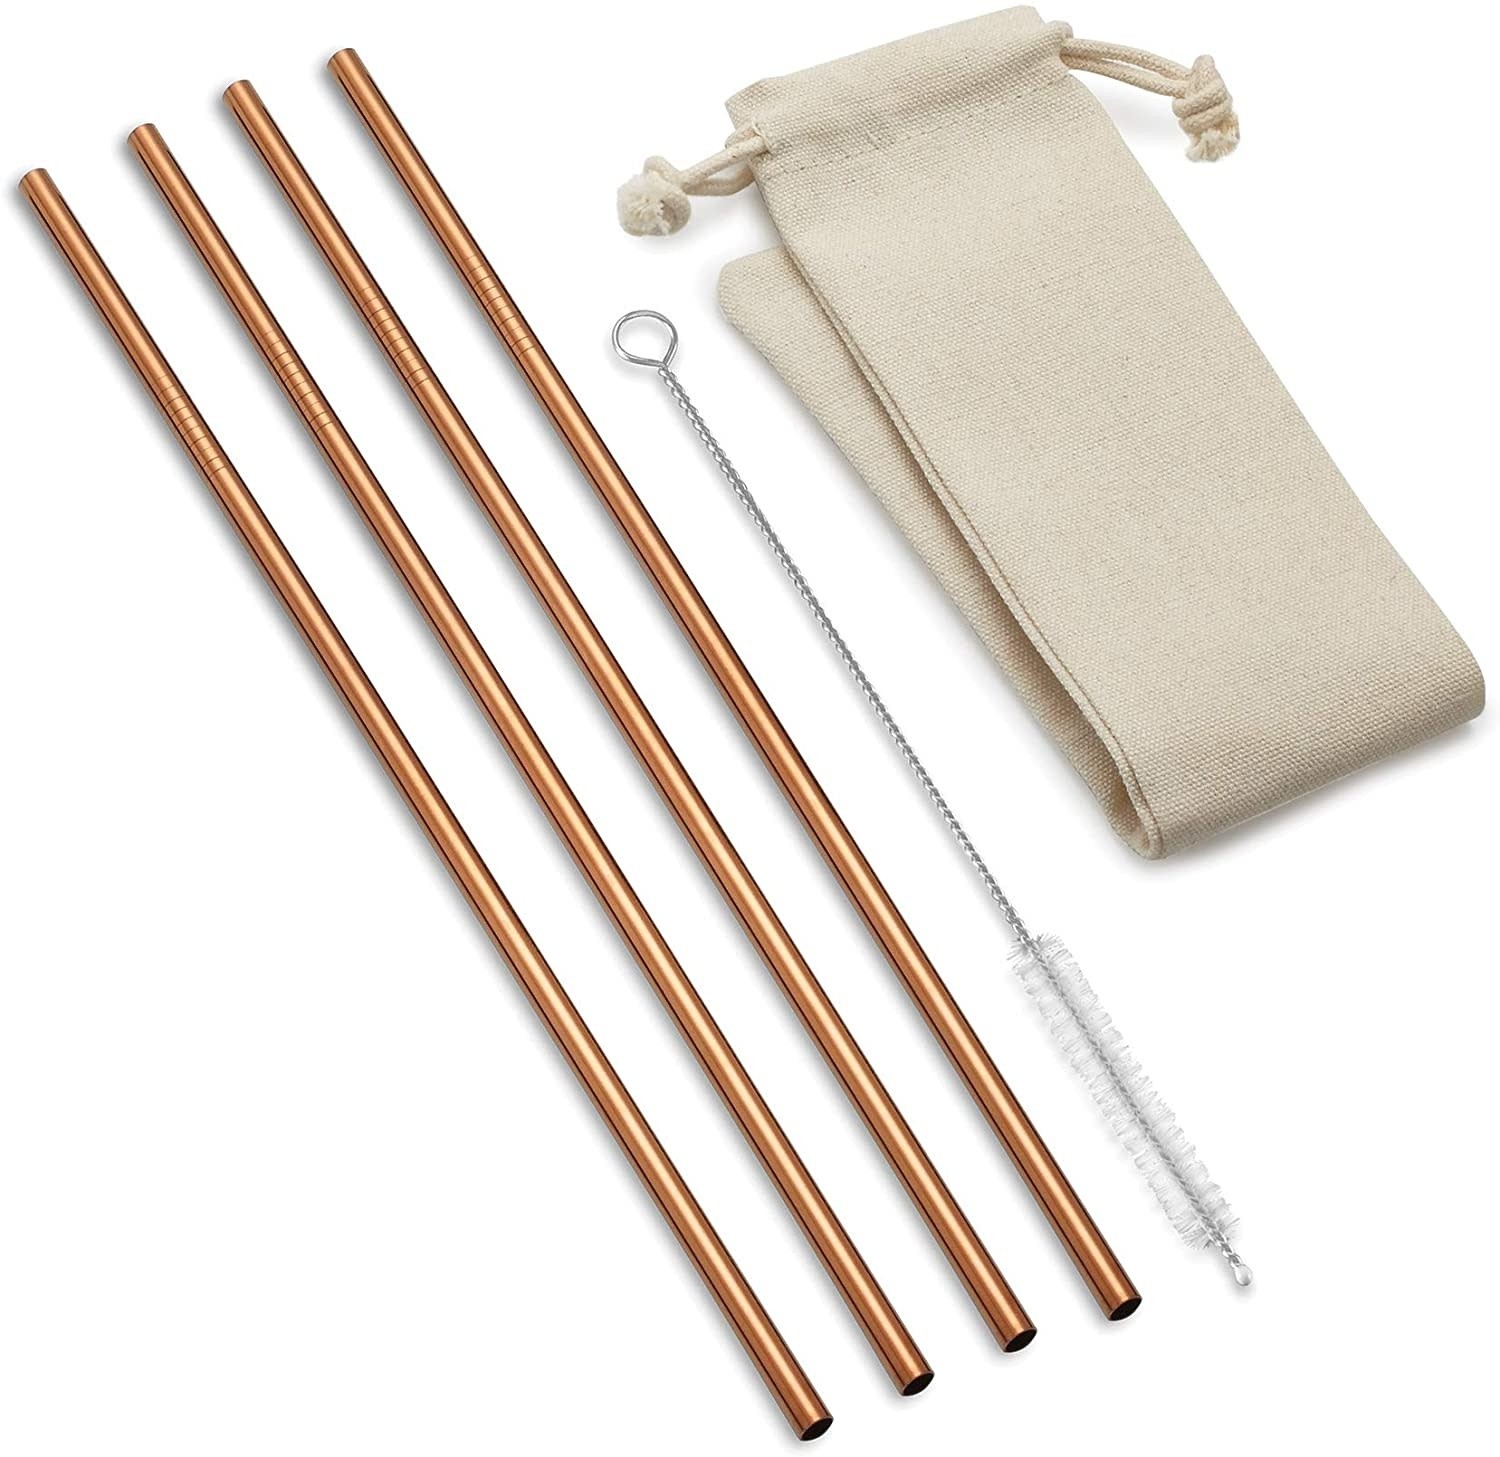 Copper Drinking Straws - Reusable & Environment Friendly Straws